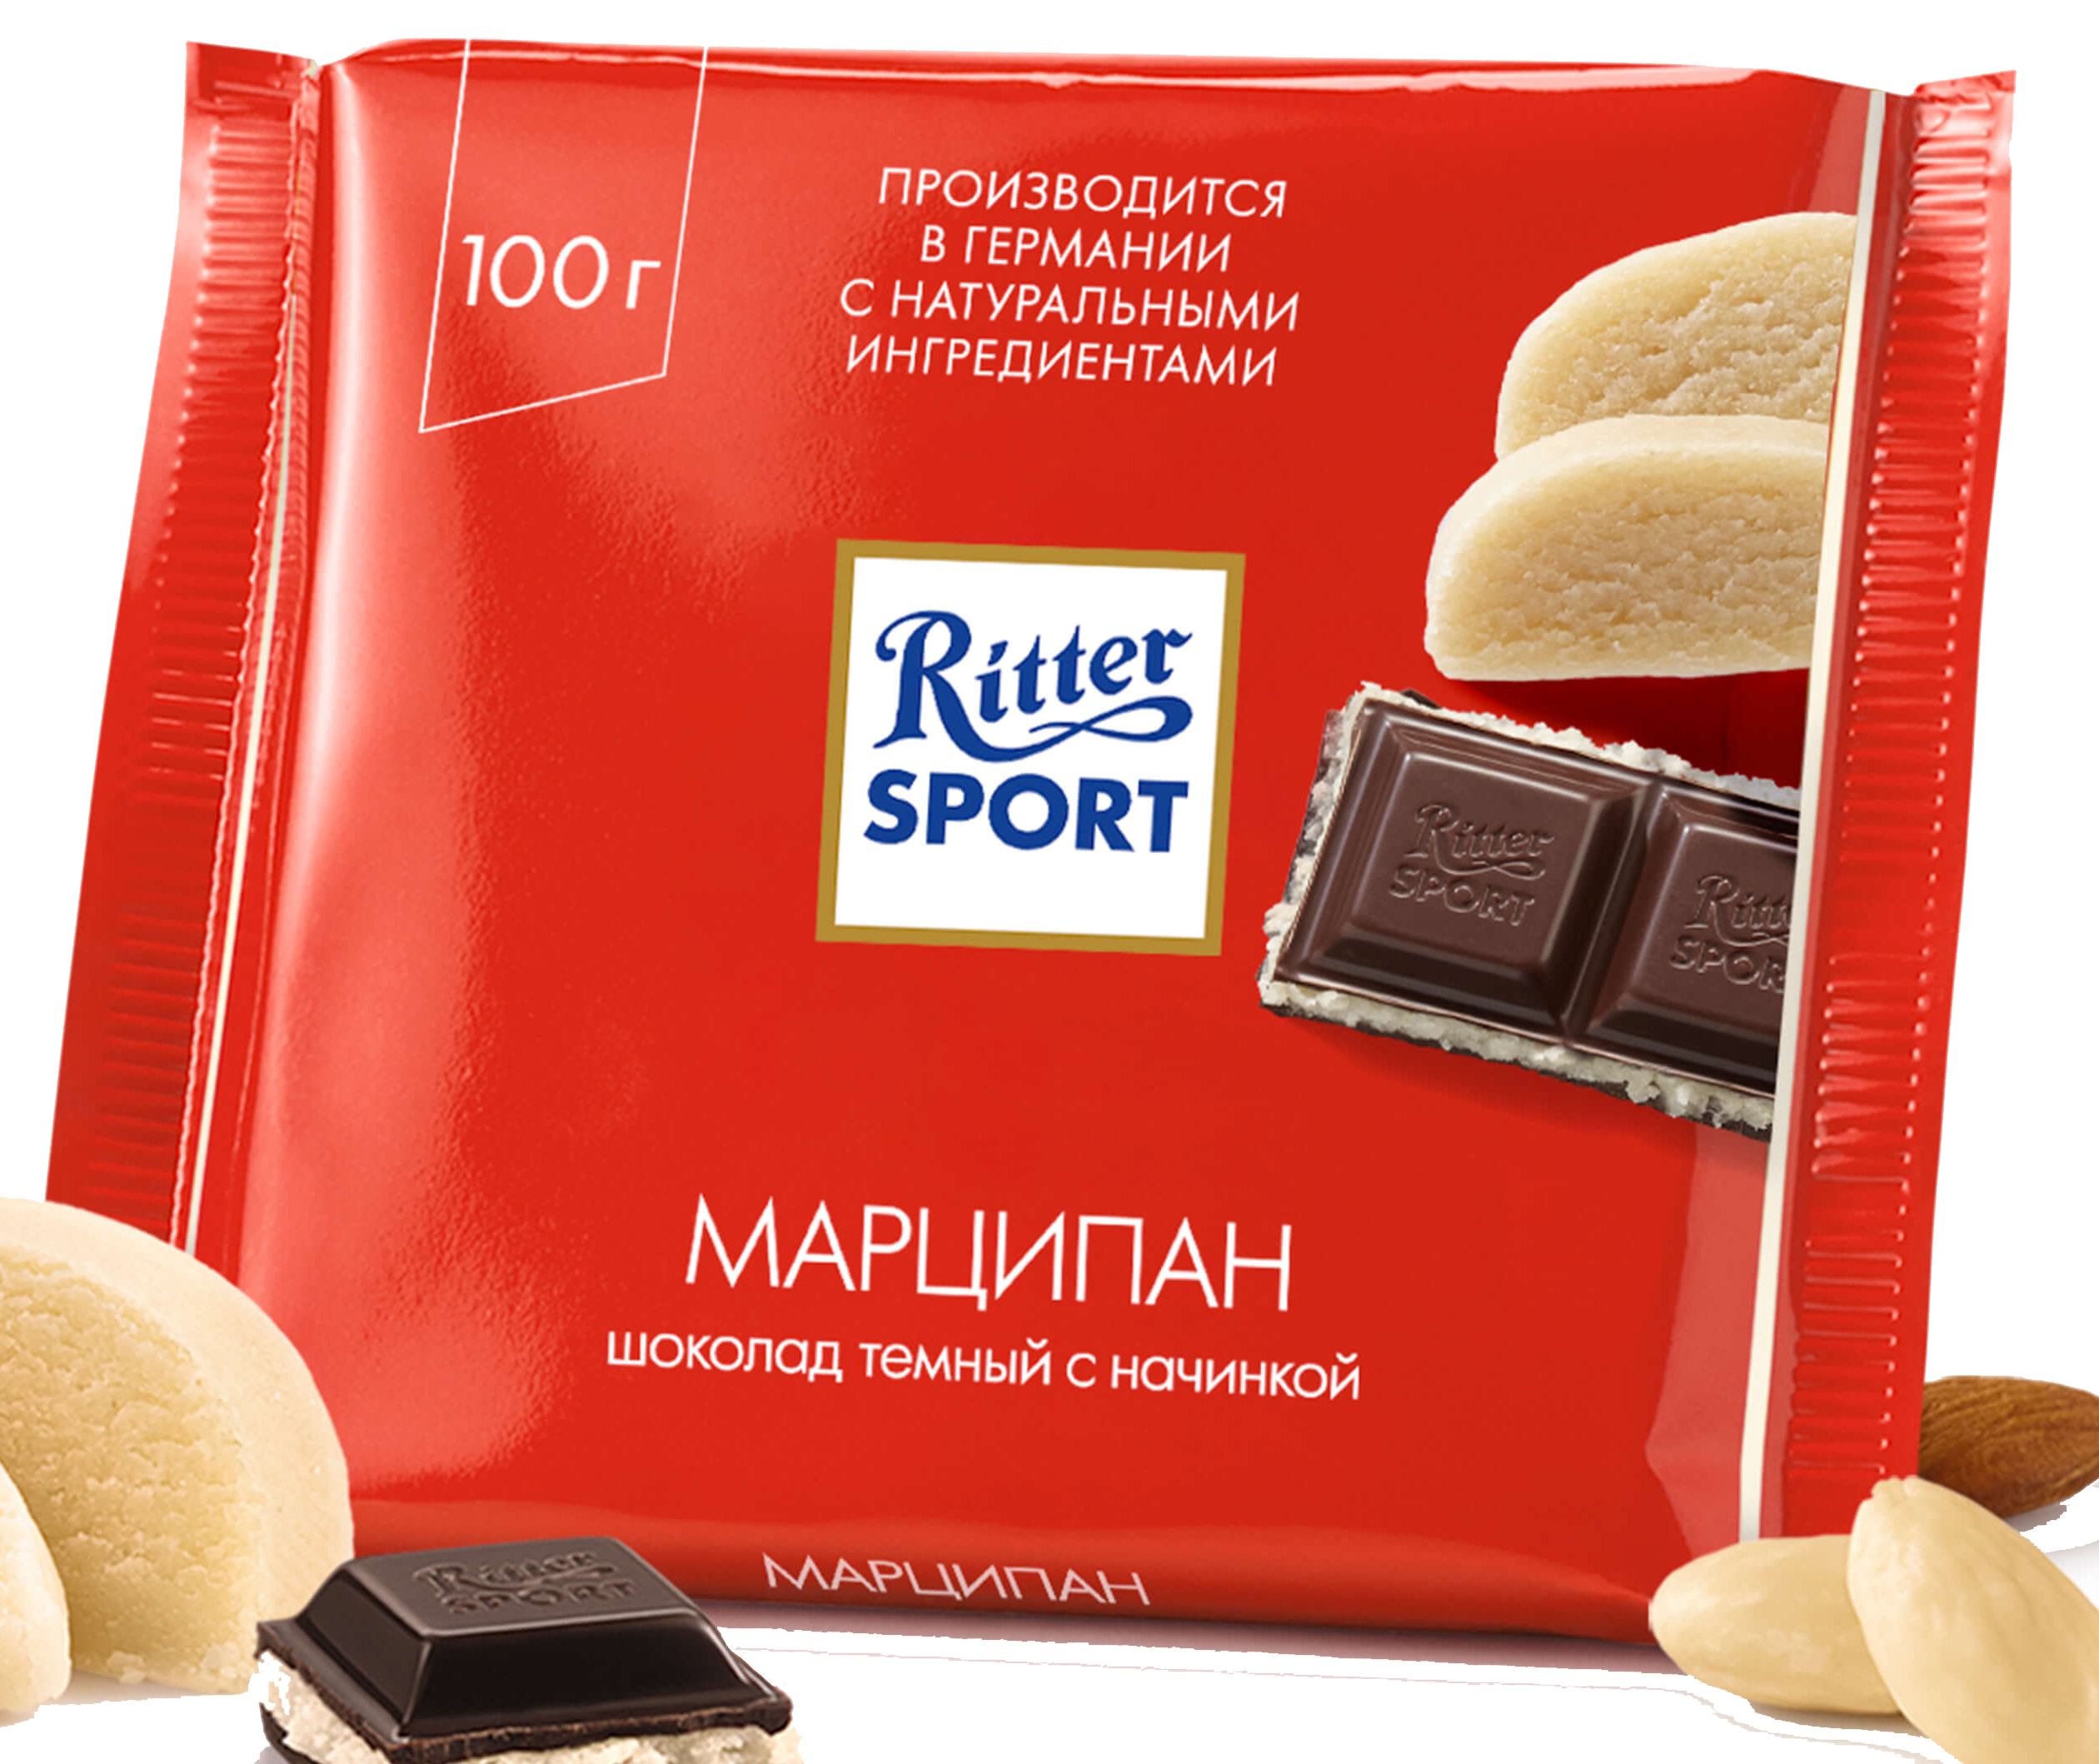 Шоколад Ritter Sport "марципан" темный. Риттер спорт шоколад с марципаном. Шоколад Риттер спорт темный марципан 100. Шоколад Риттер спорт темный с марципаном 100г.